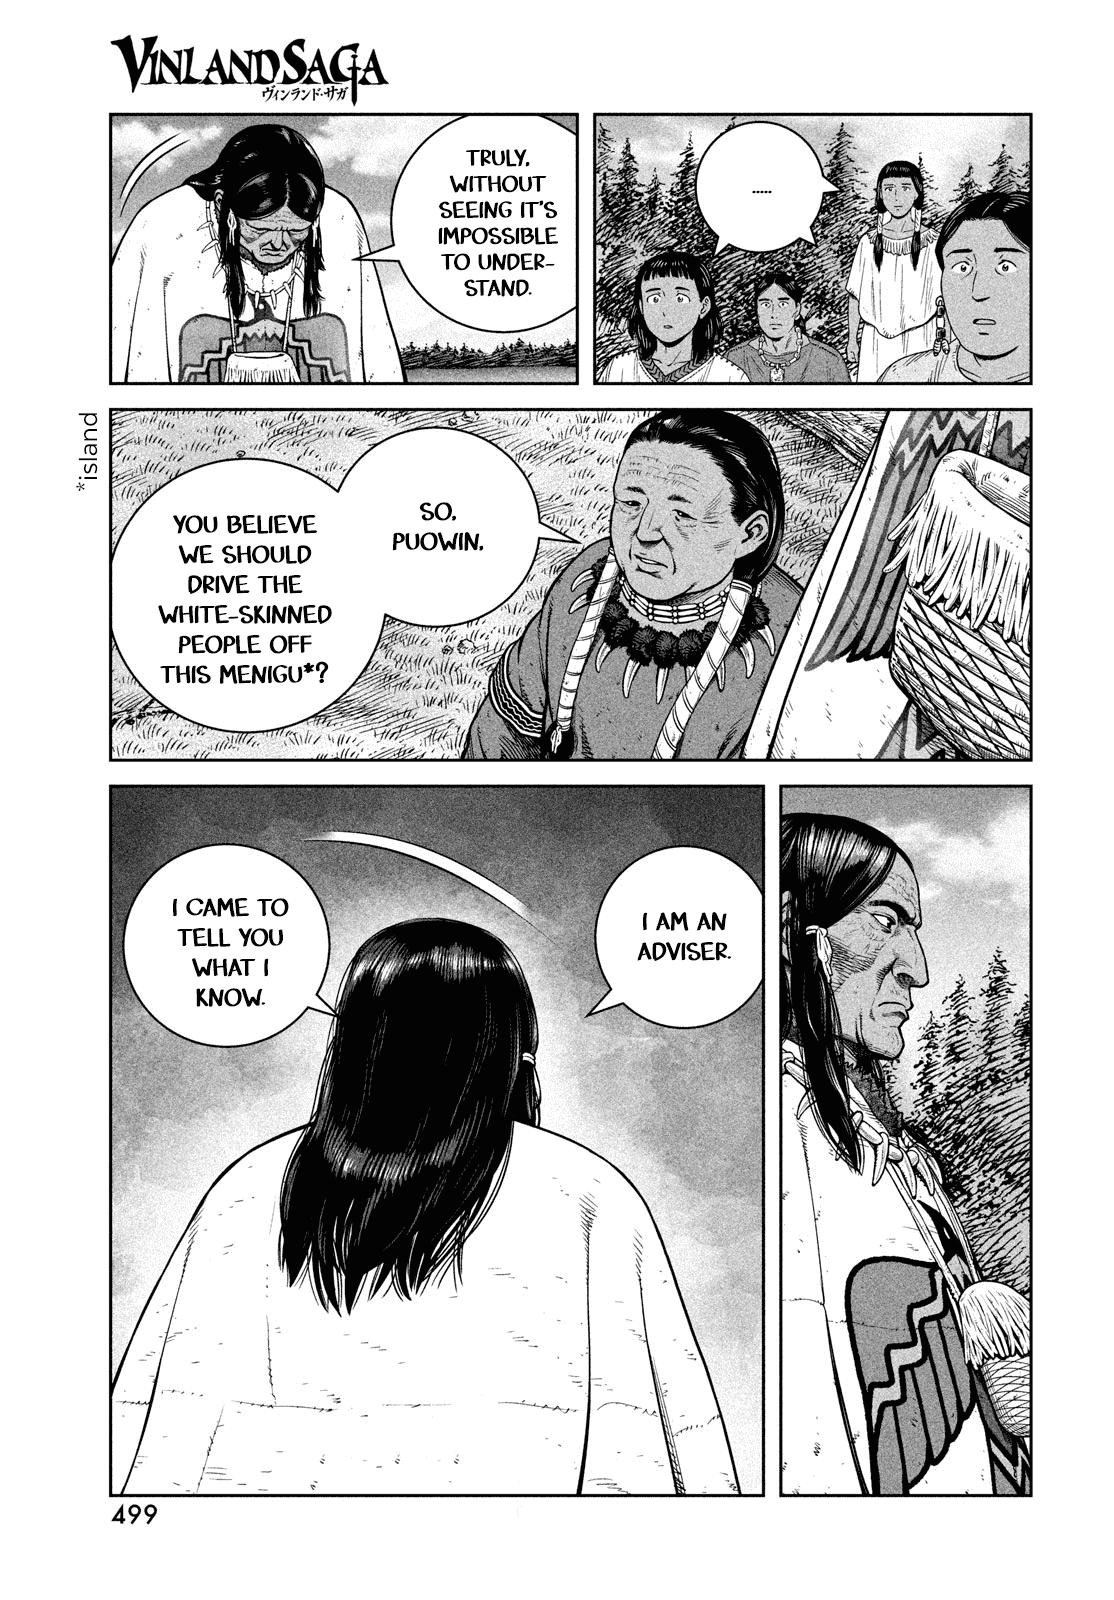 Vinland Saga Manga Manga Chapter - 183 - image 20